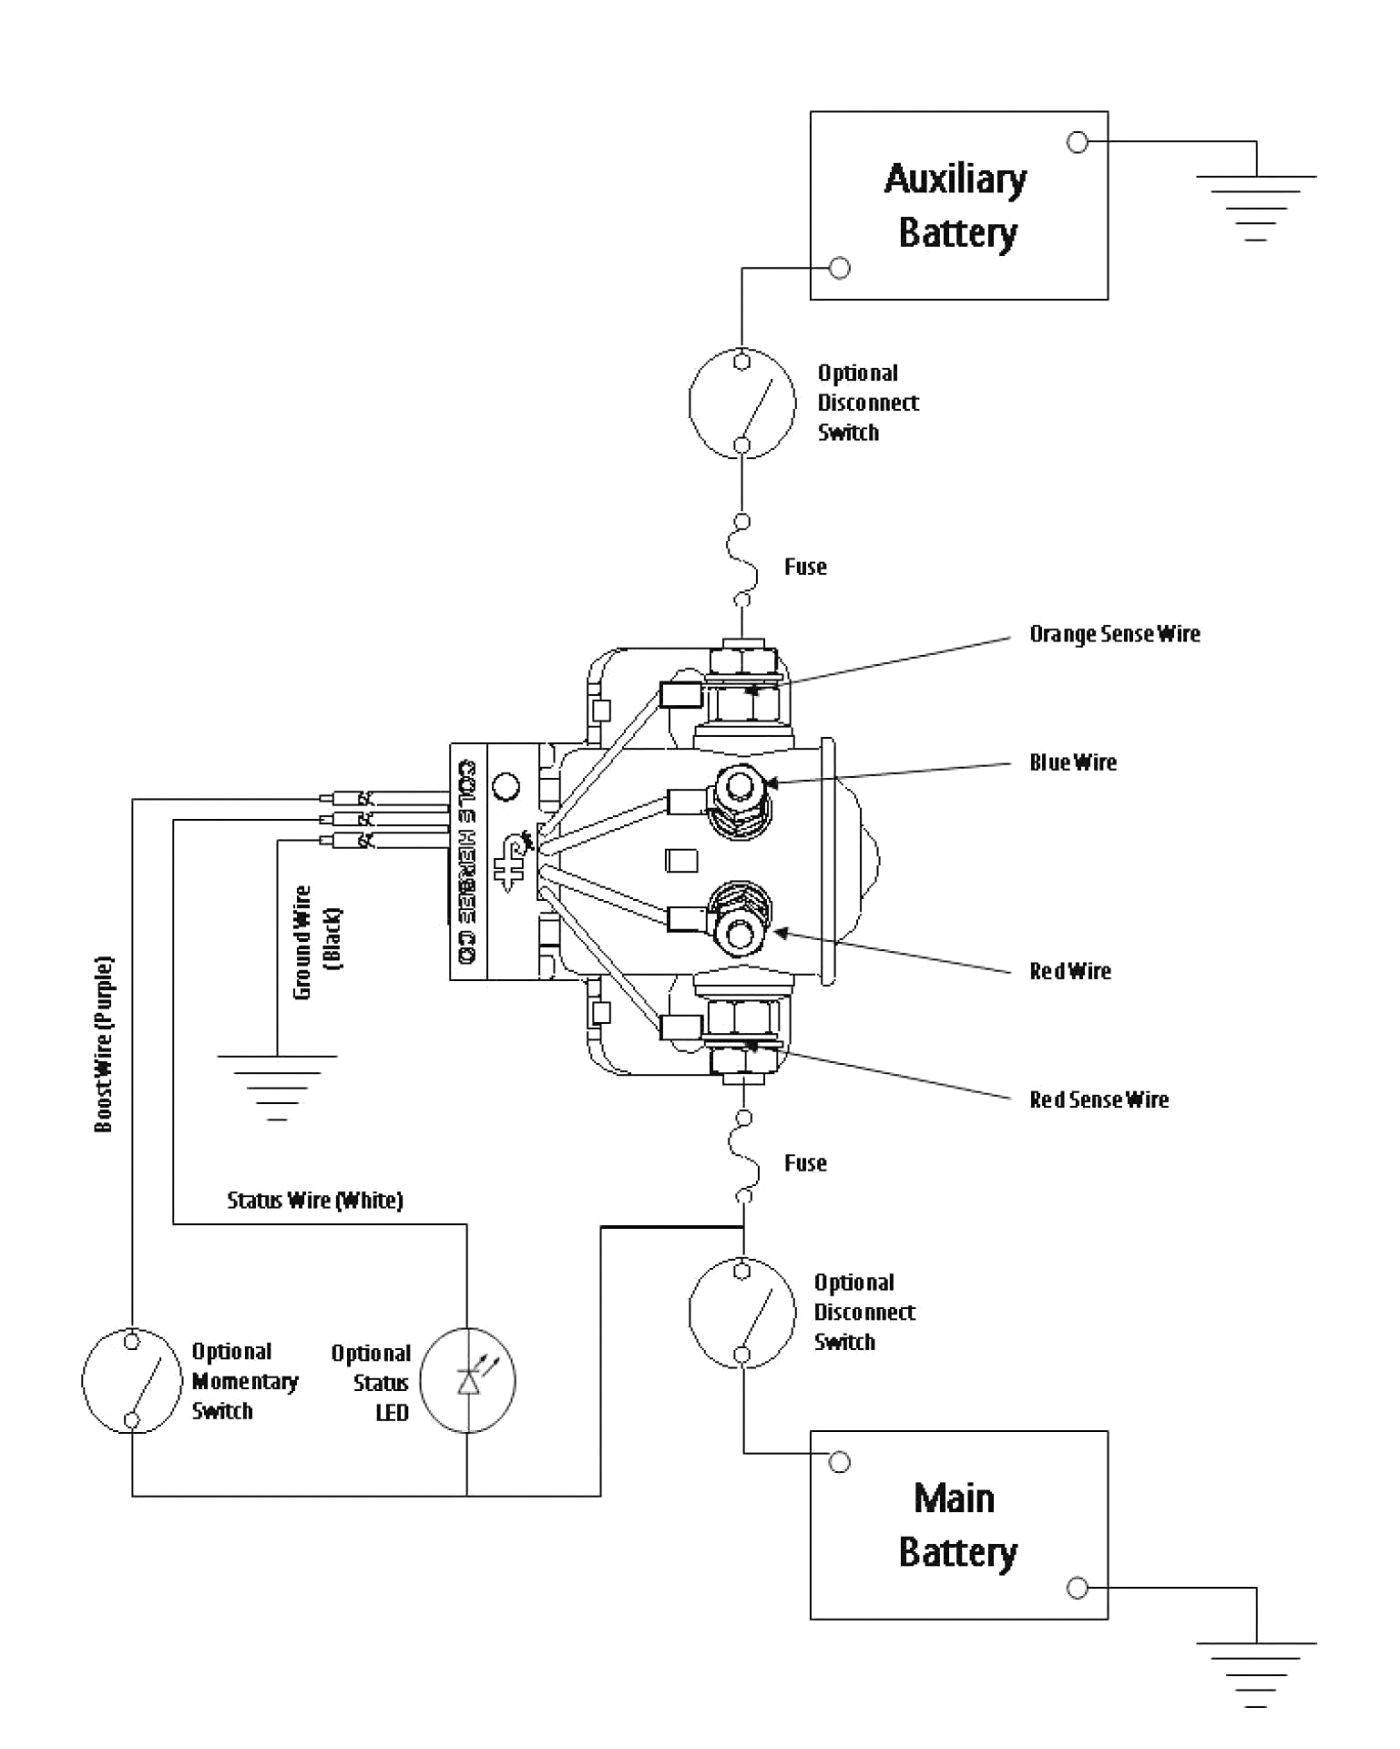 data flow diagrams then 28 brilliant viper 5305v wiring diagram documents ideas